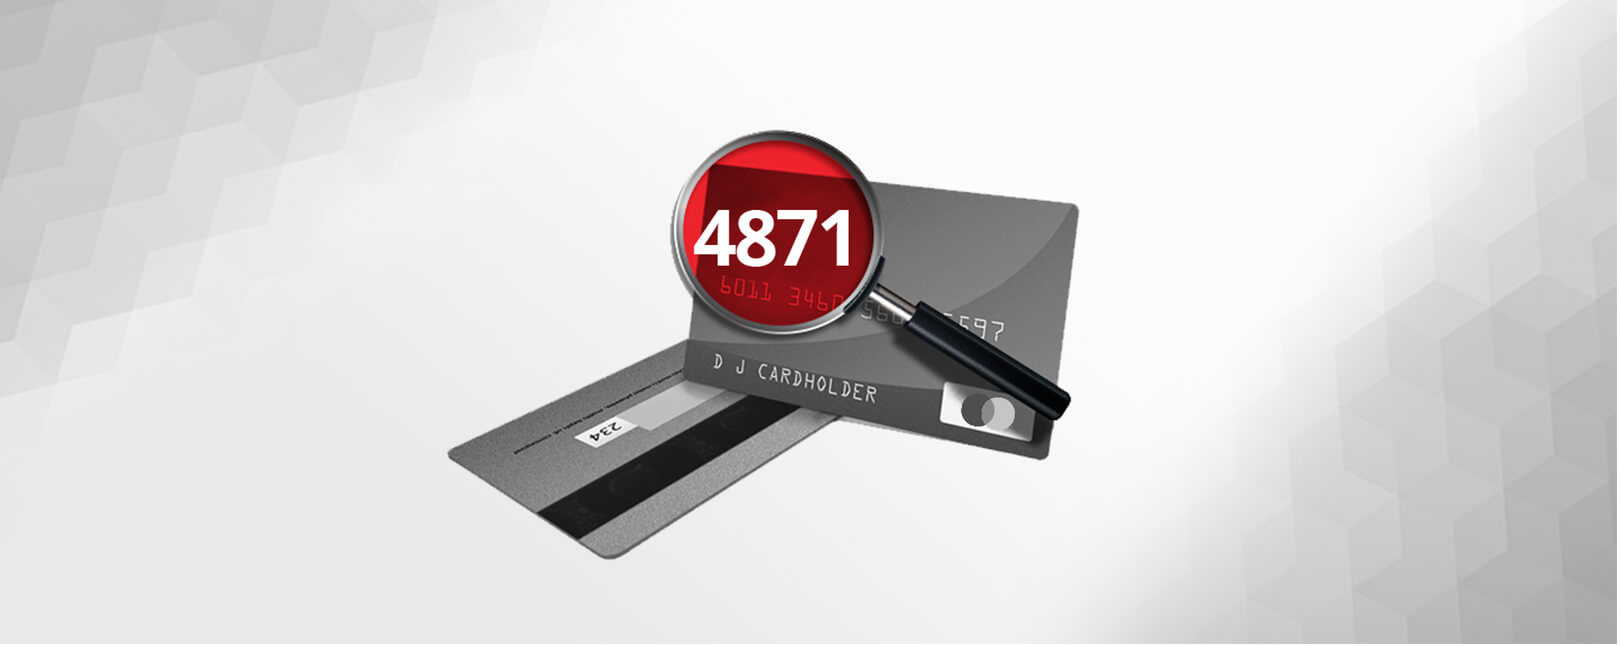 4871- Chip Liability Shift - Stolen Card